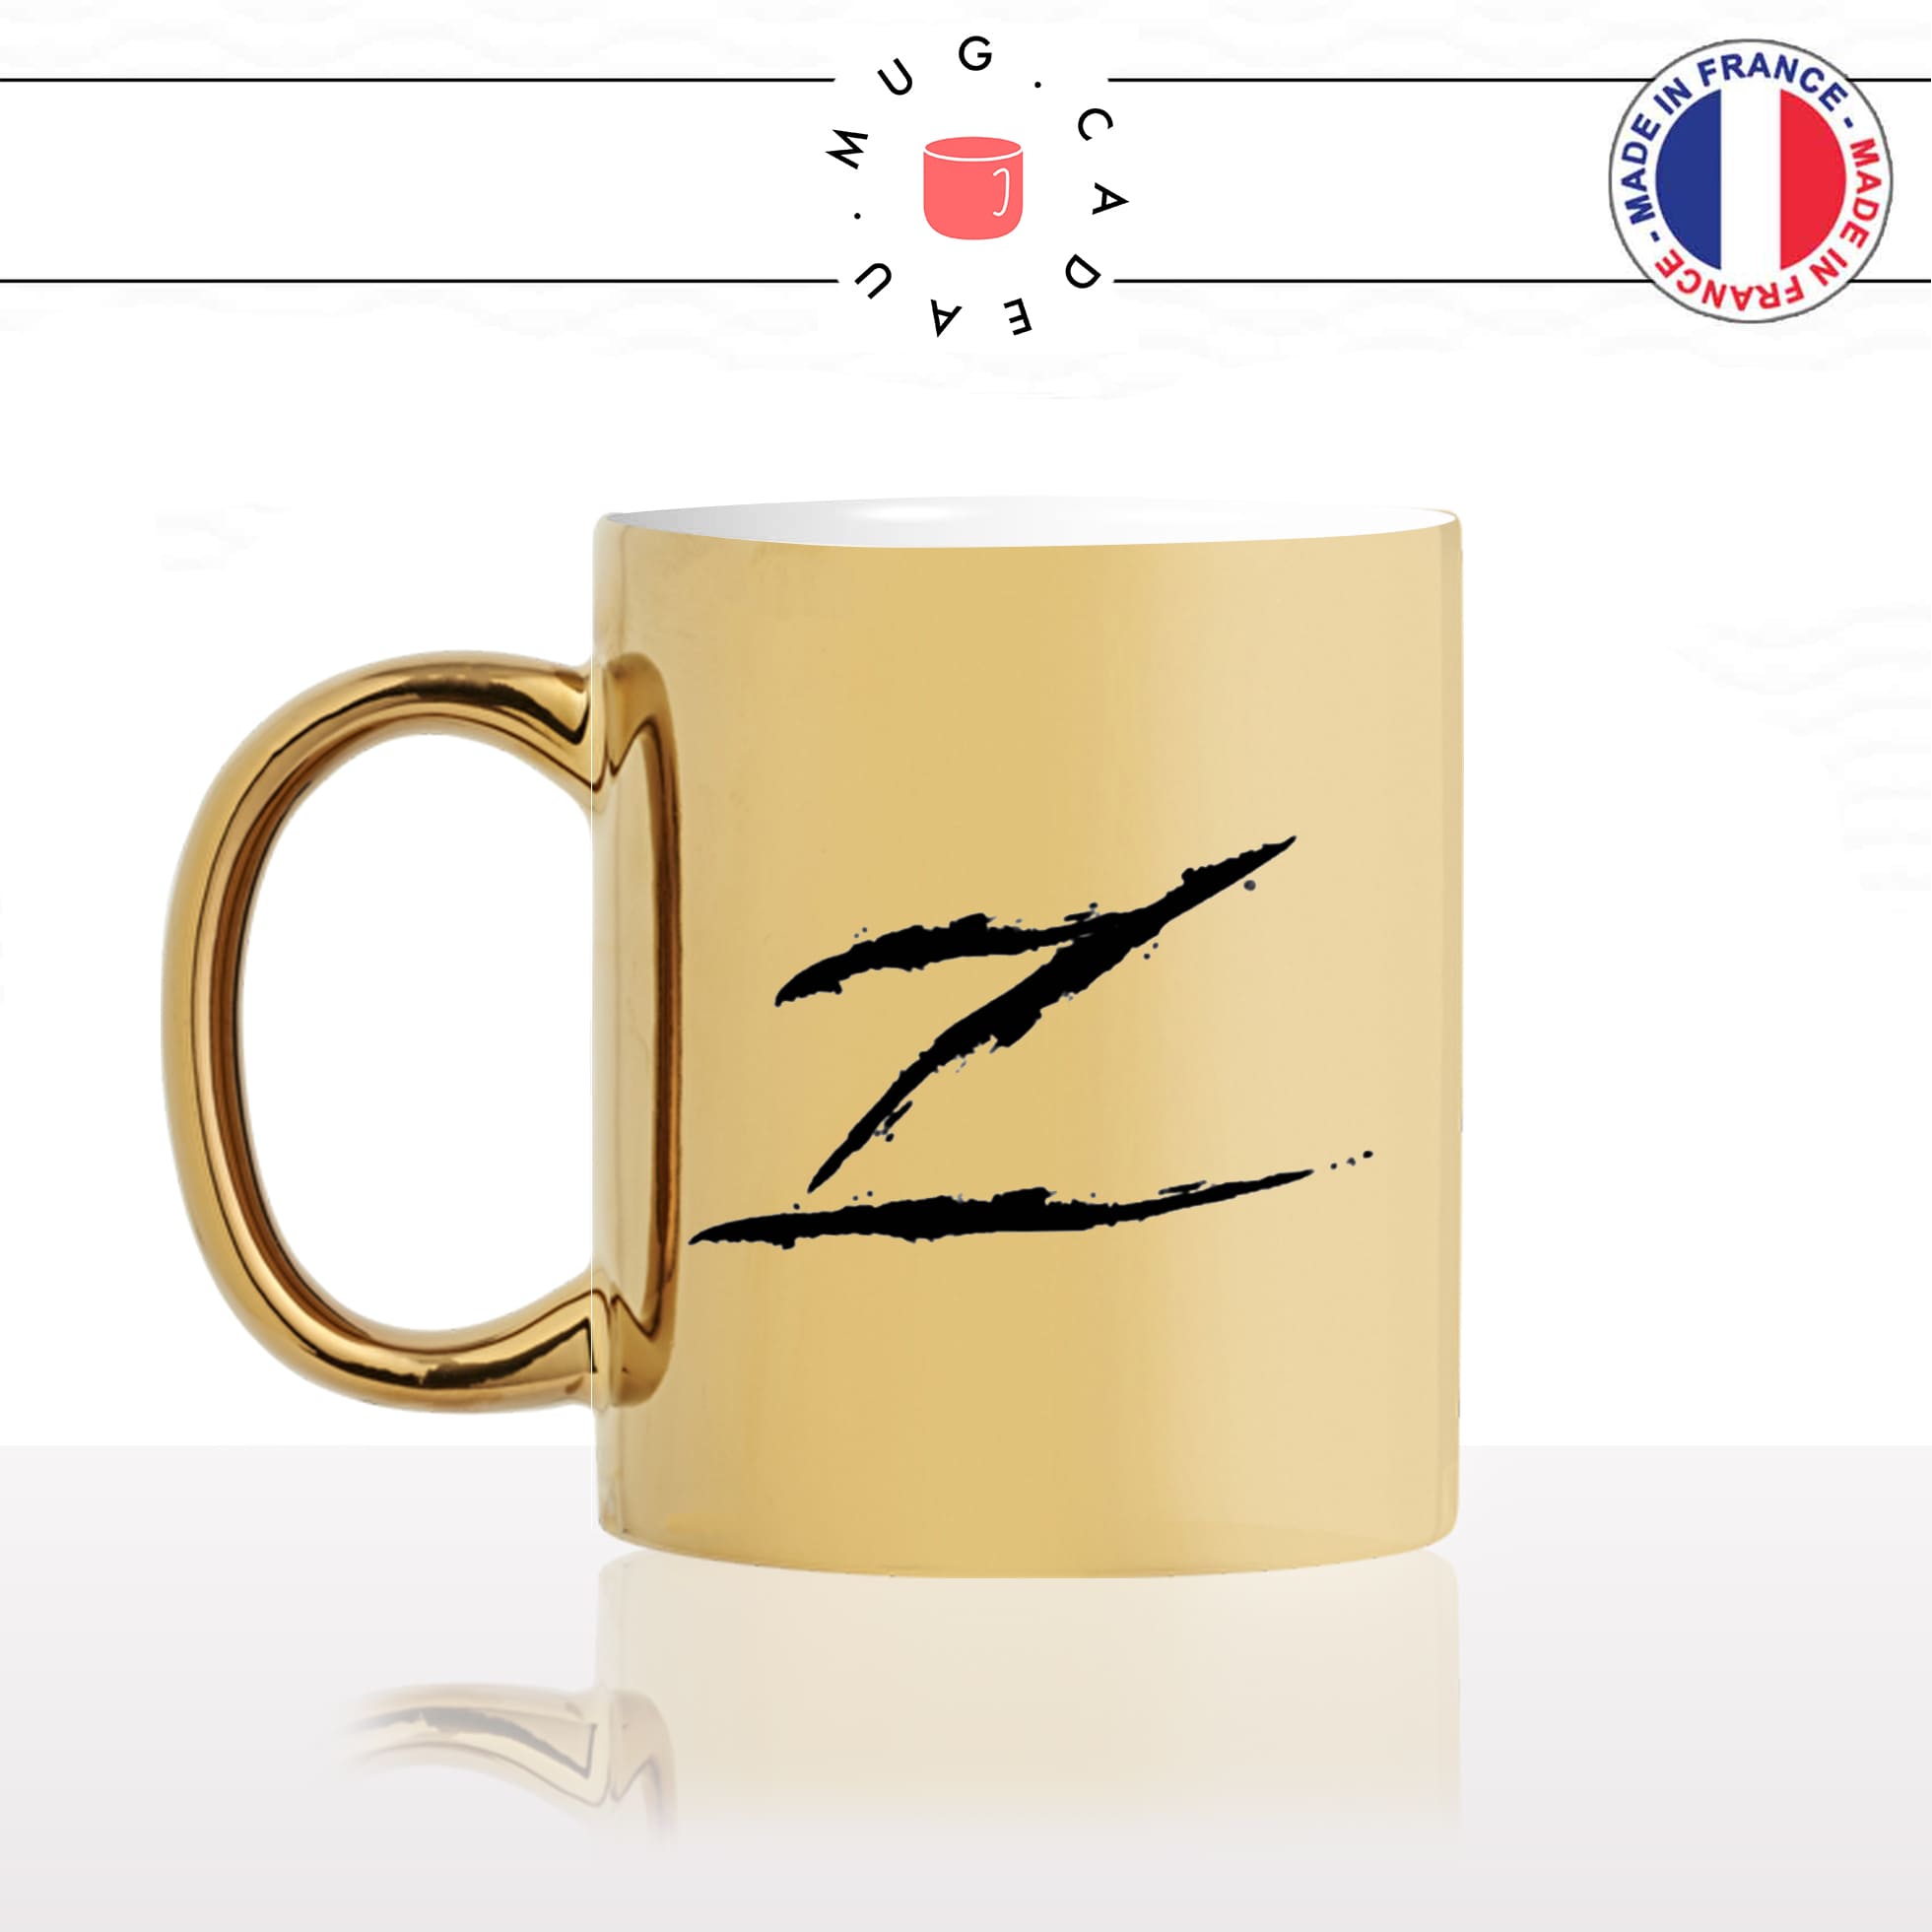 mug-tasse-or-doré-gold-unique-z-zorro-generation-film-banderas-héro-zemmour-2022-homme-femme-humour-fun-cool-idée-cadeau-original